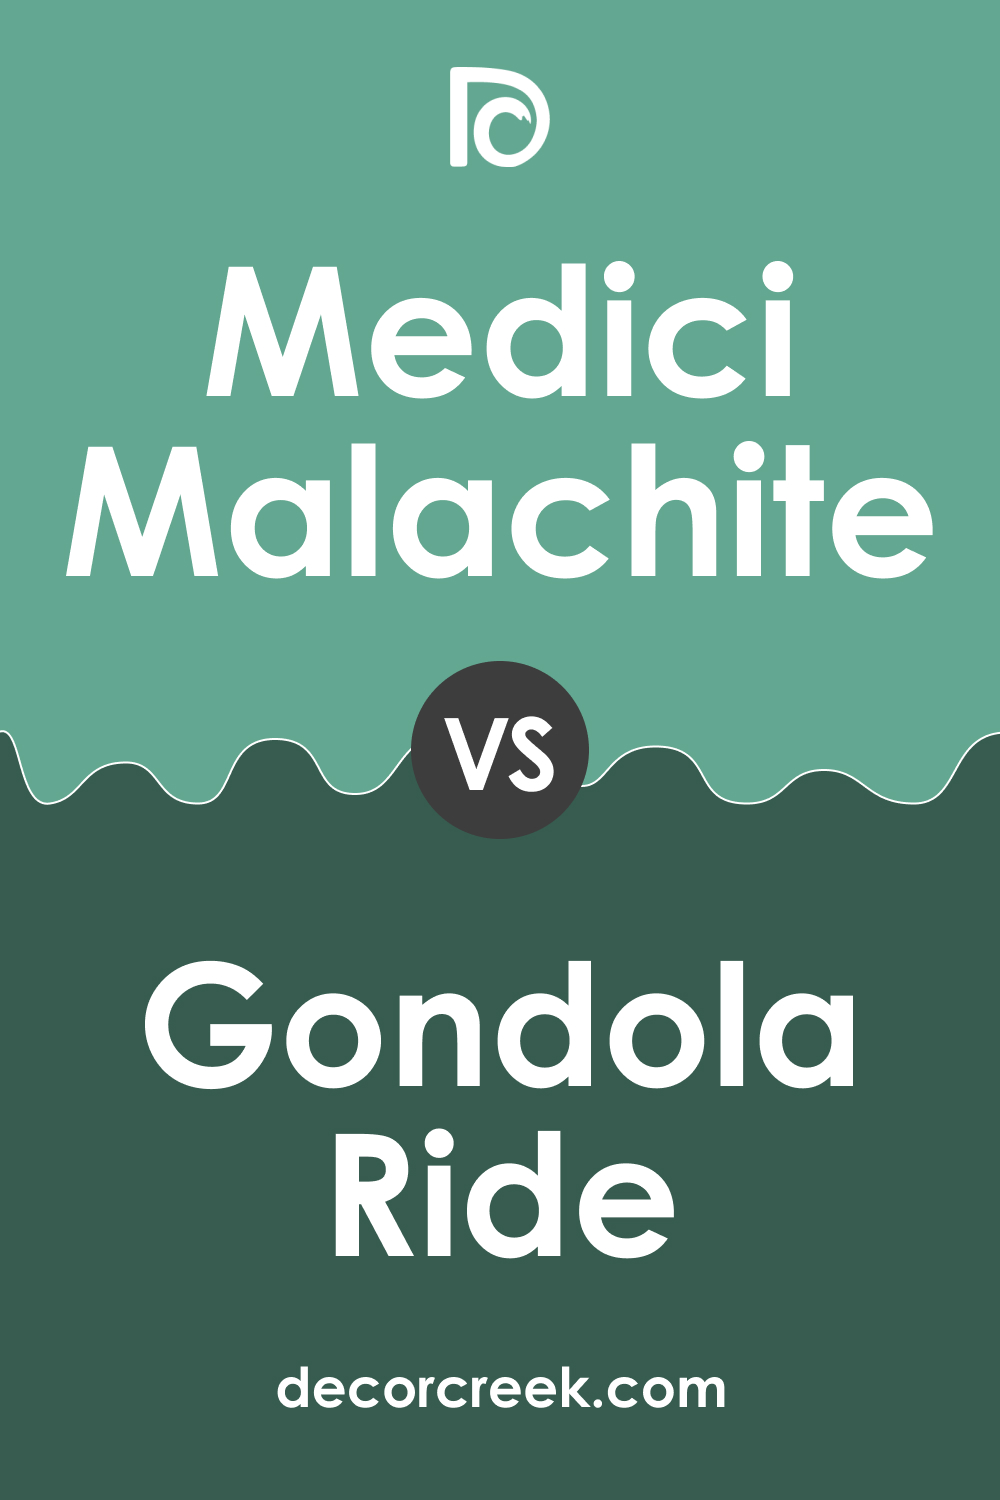 Medici Malachite 600 vs. BM 602 Gondola Ride